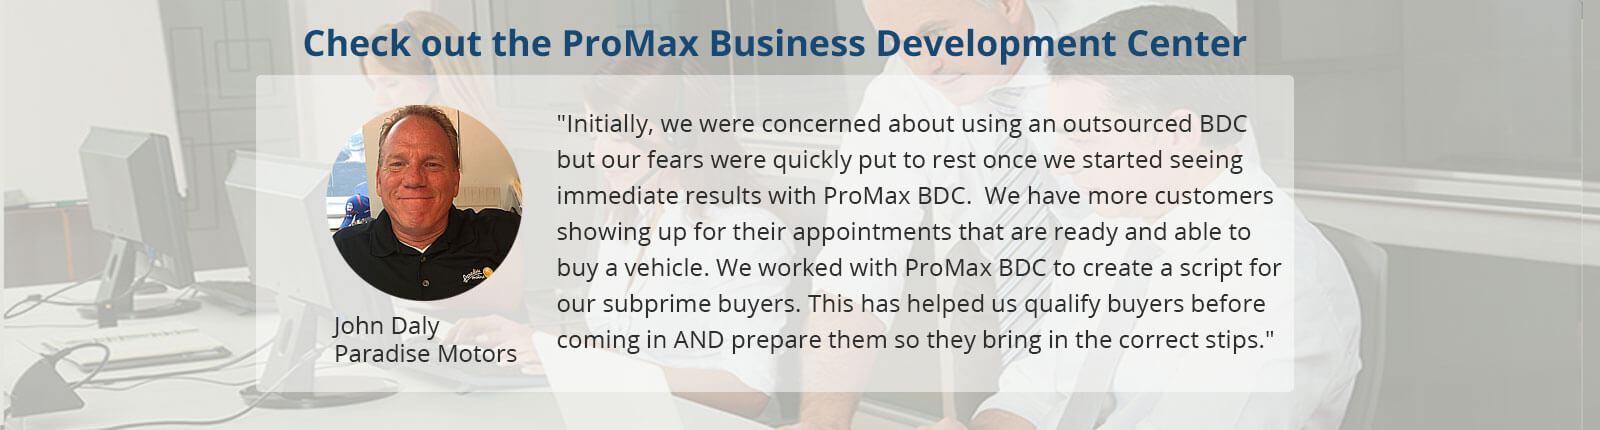 promax software training